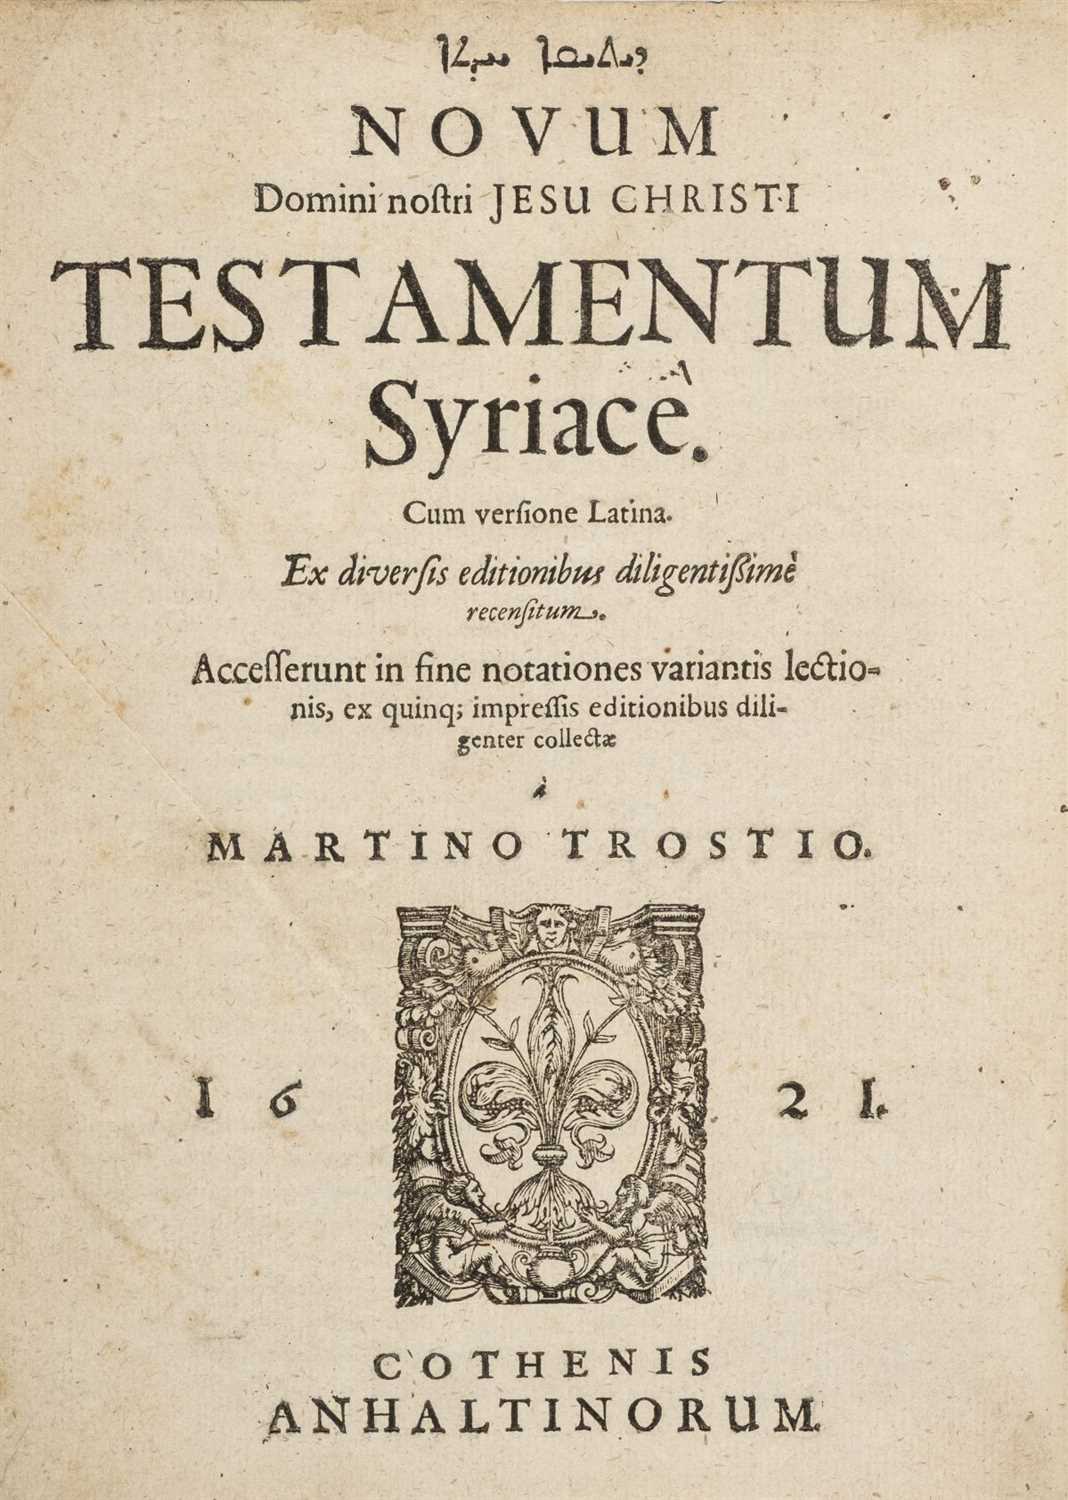 Lot 271 - New Testament [Syriac]. Novum Domini nostri Jesu Christi Testamentum Syriace, 1621